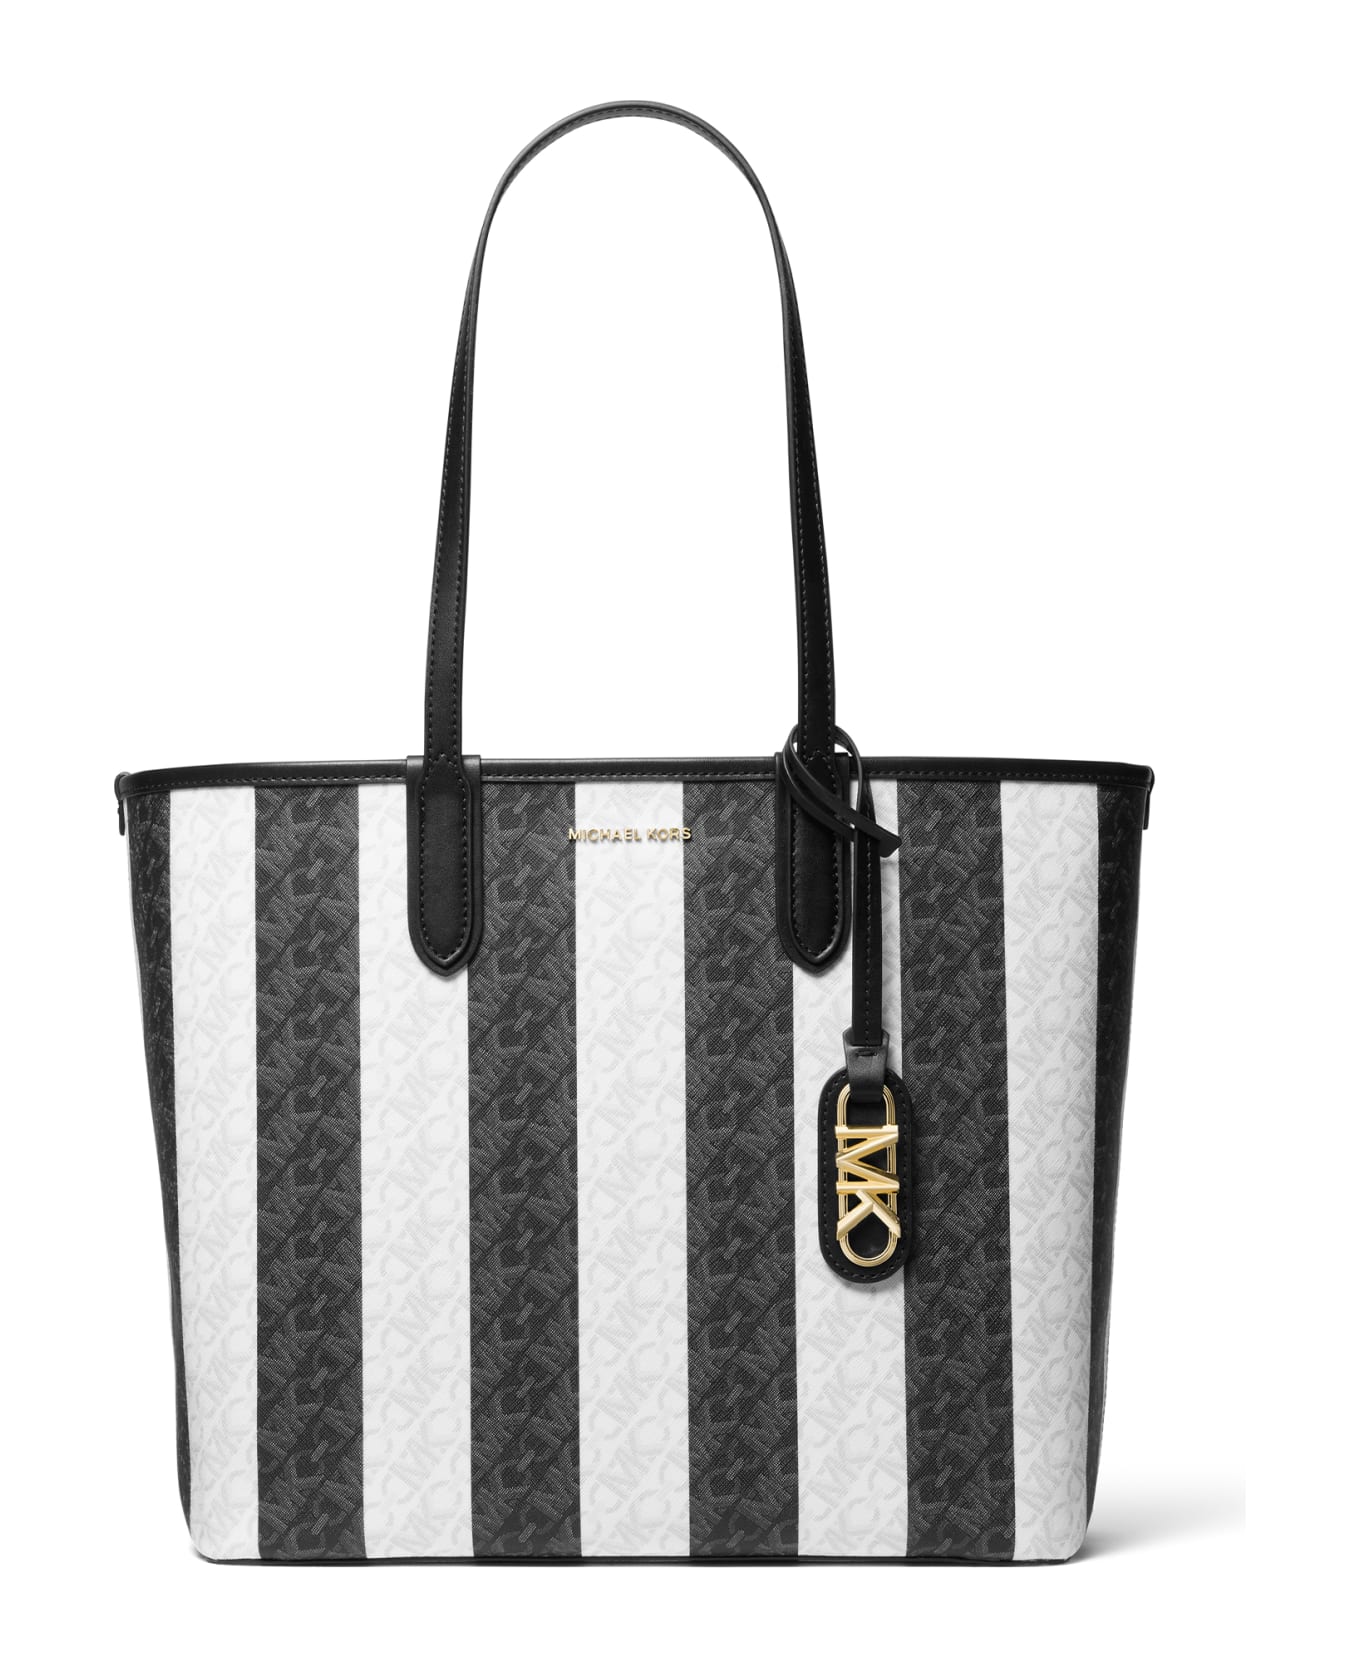 Michael Kors Striped Shopping Bag With Logo - BLK OPTIC WHITE